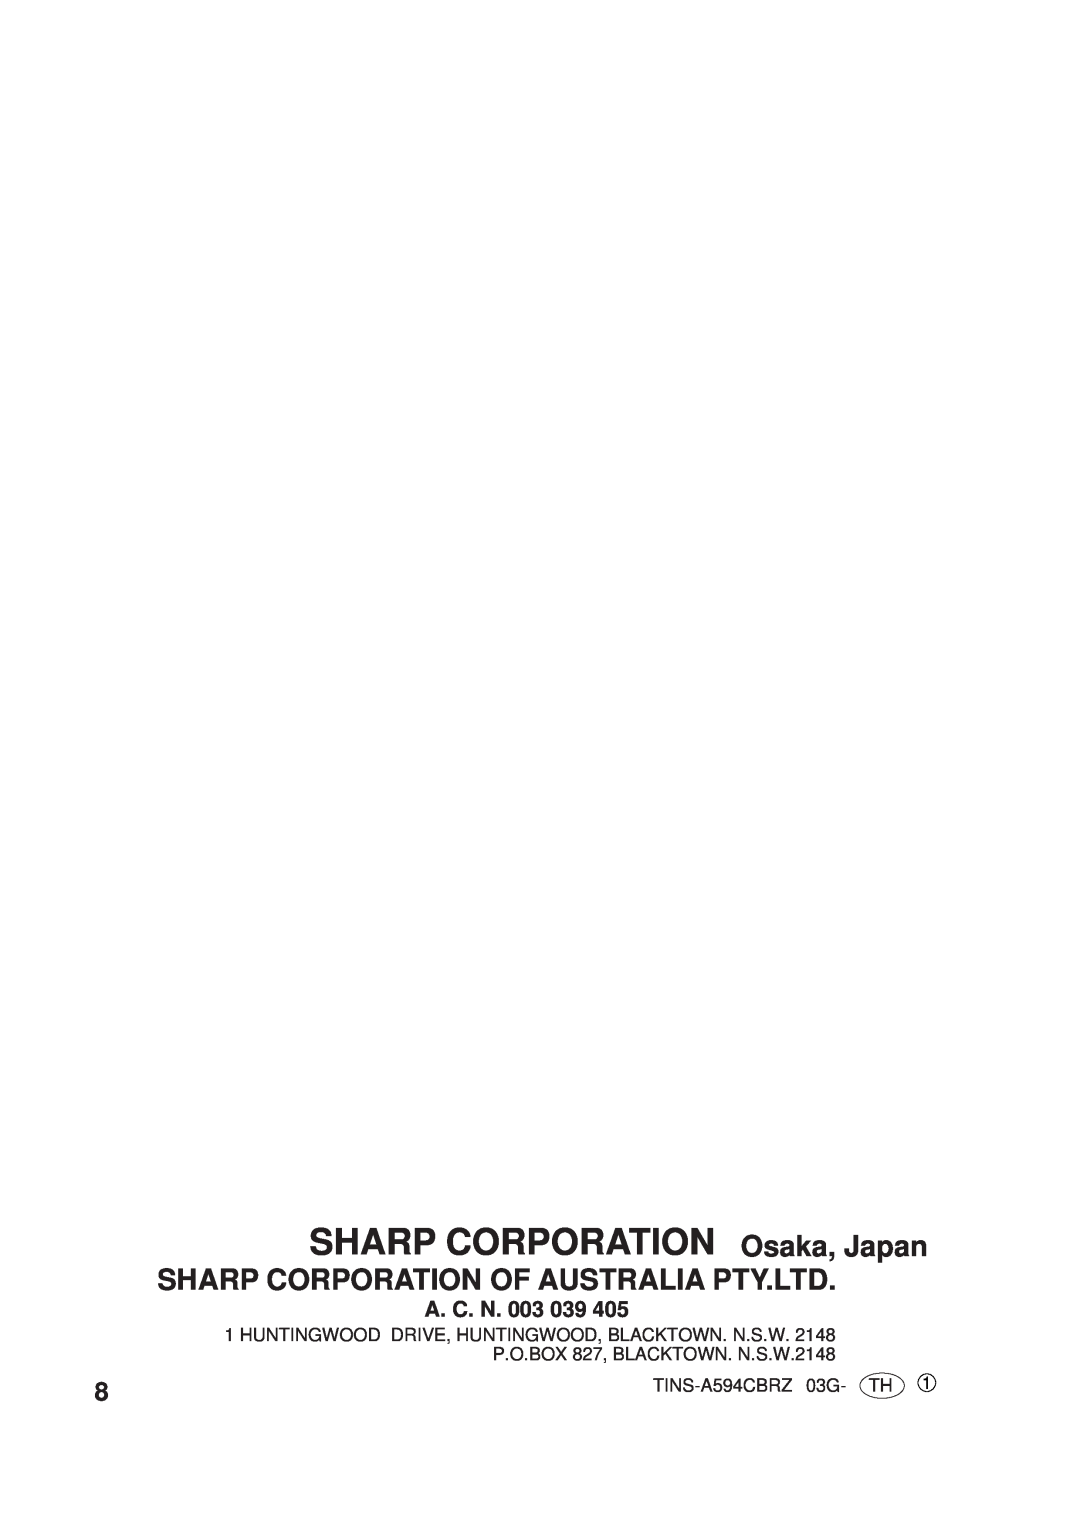 Sharp SJ560M, SJP600M, SJ600-M, SJP560M, SJP520M operation manual SHARP CORPORATION Osaka, Japan, A. C. N. 003 